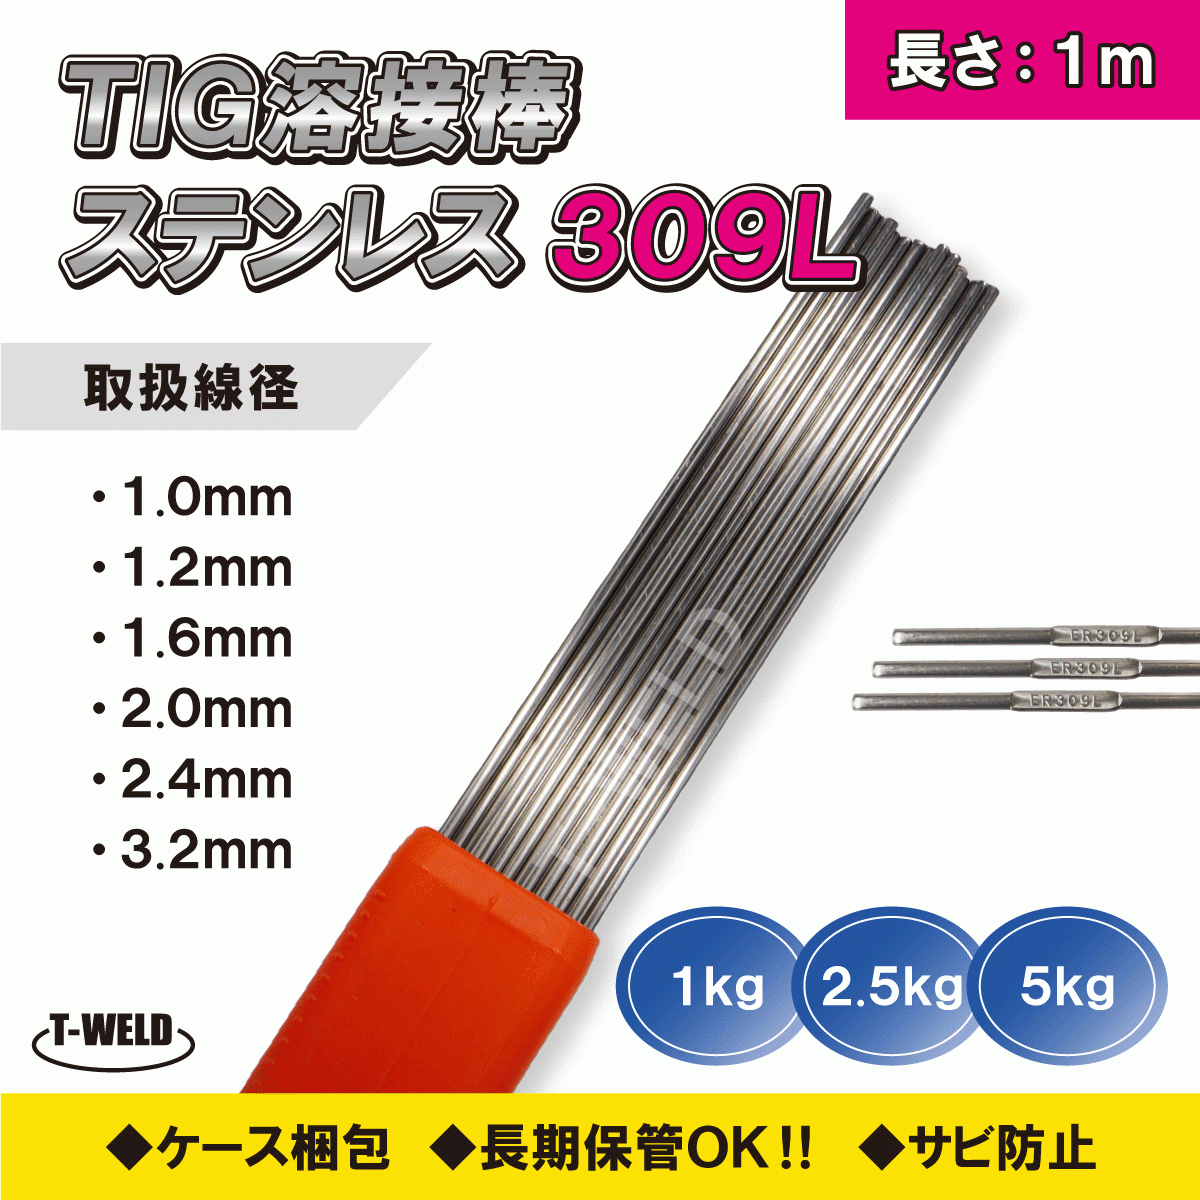 TIG stainless steel welding stick TIG 309L 1.2mm×1m 1kg